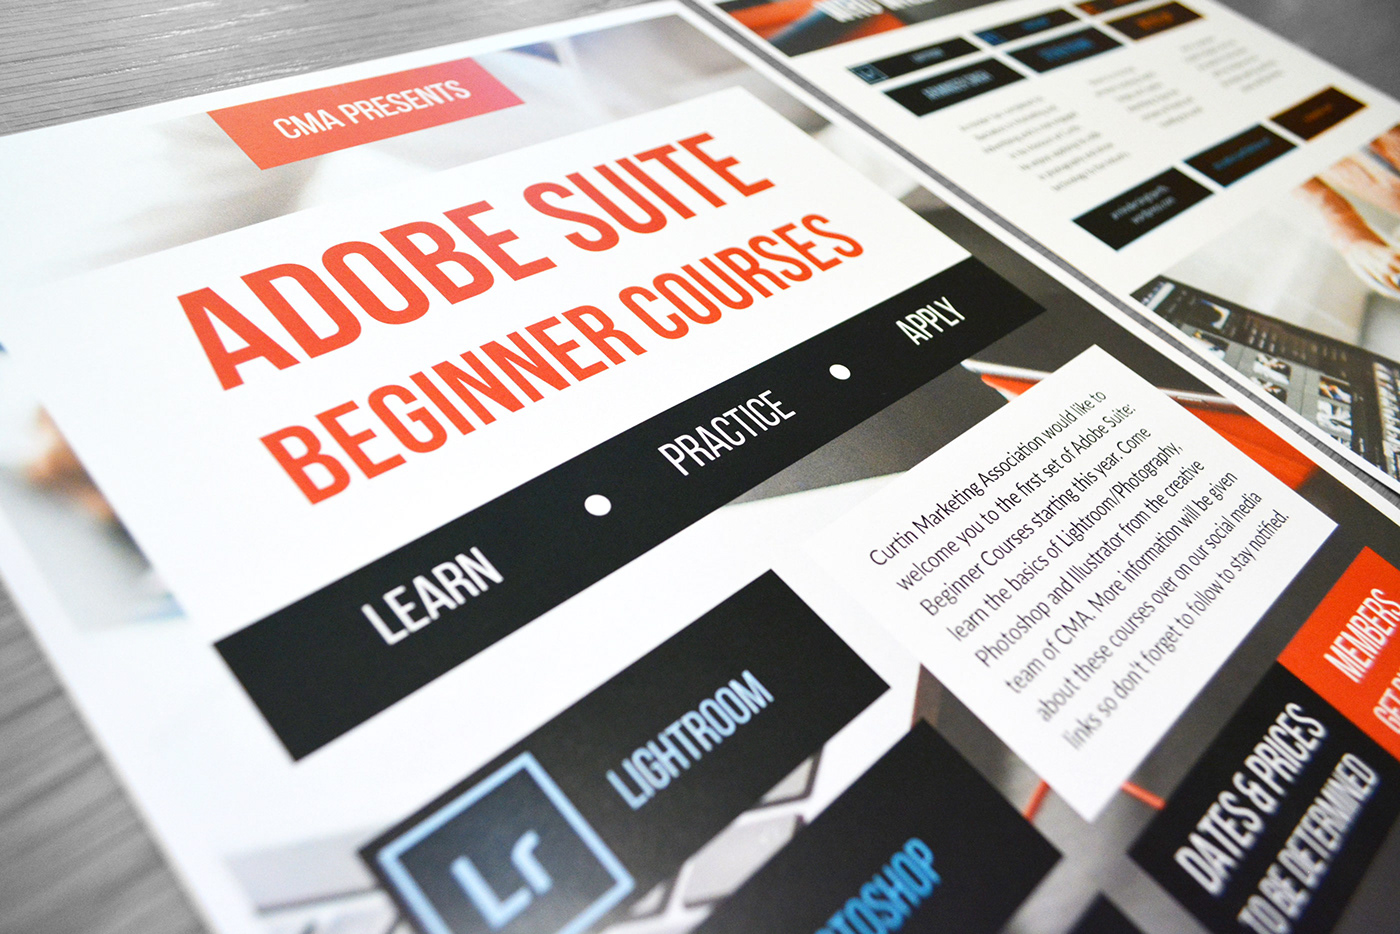 adobe certificate CMA Course Guide flyer Illustrator photoshop prsc